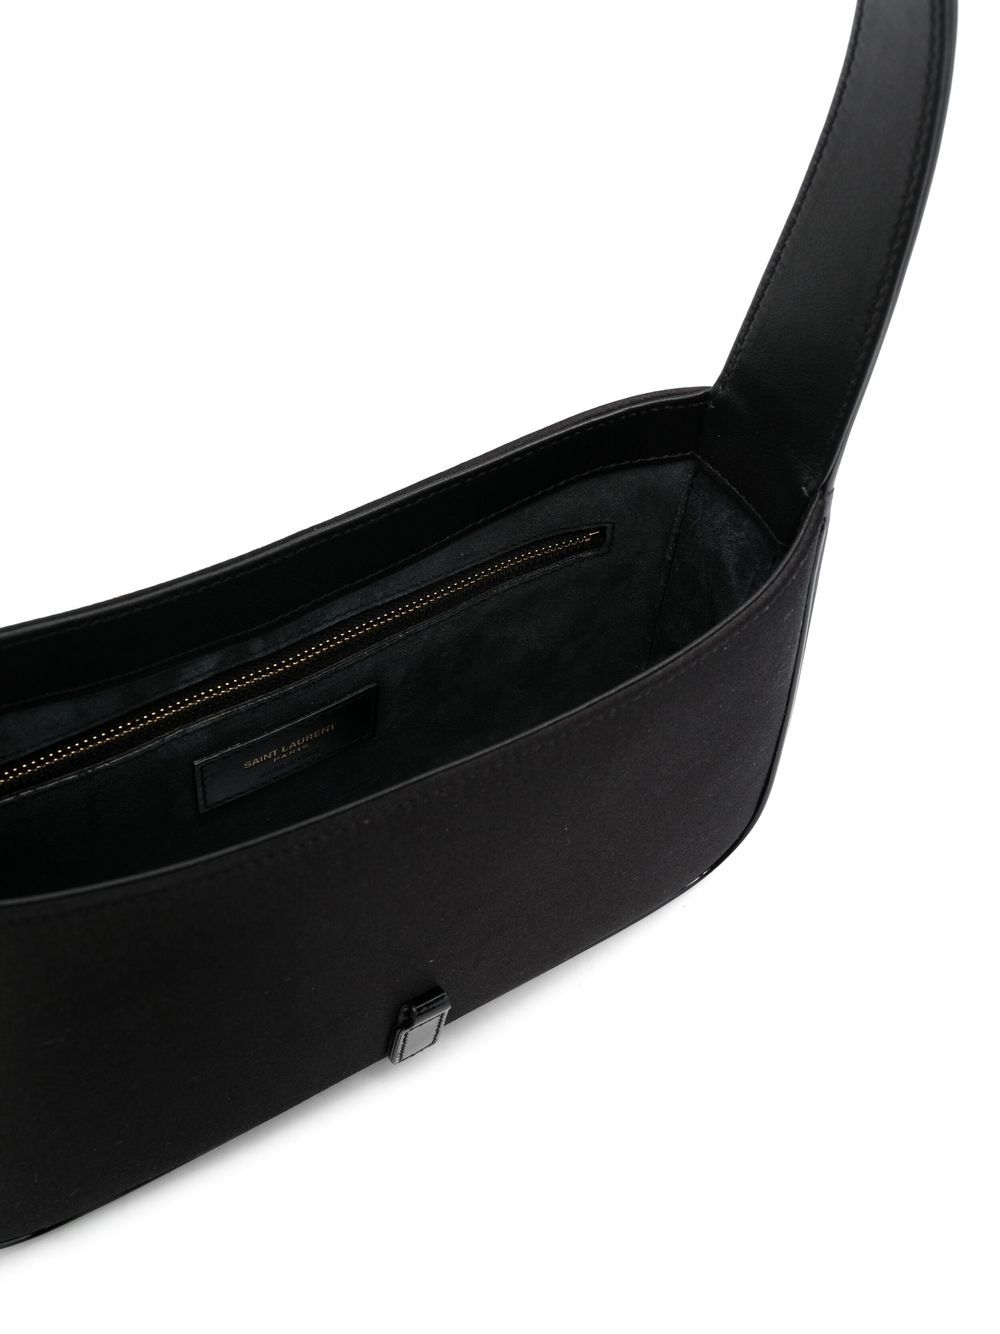 Le 5 A 7 YSL Satin & Patent Leather Shoulder Bag